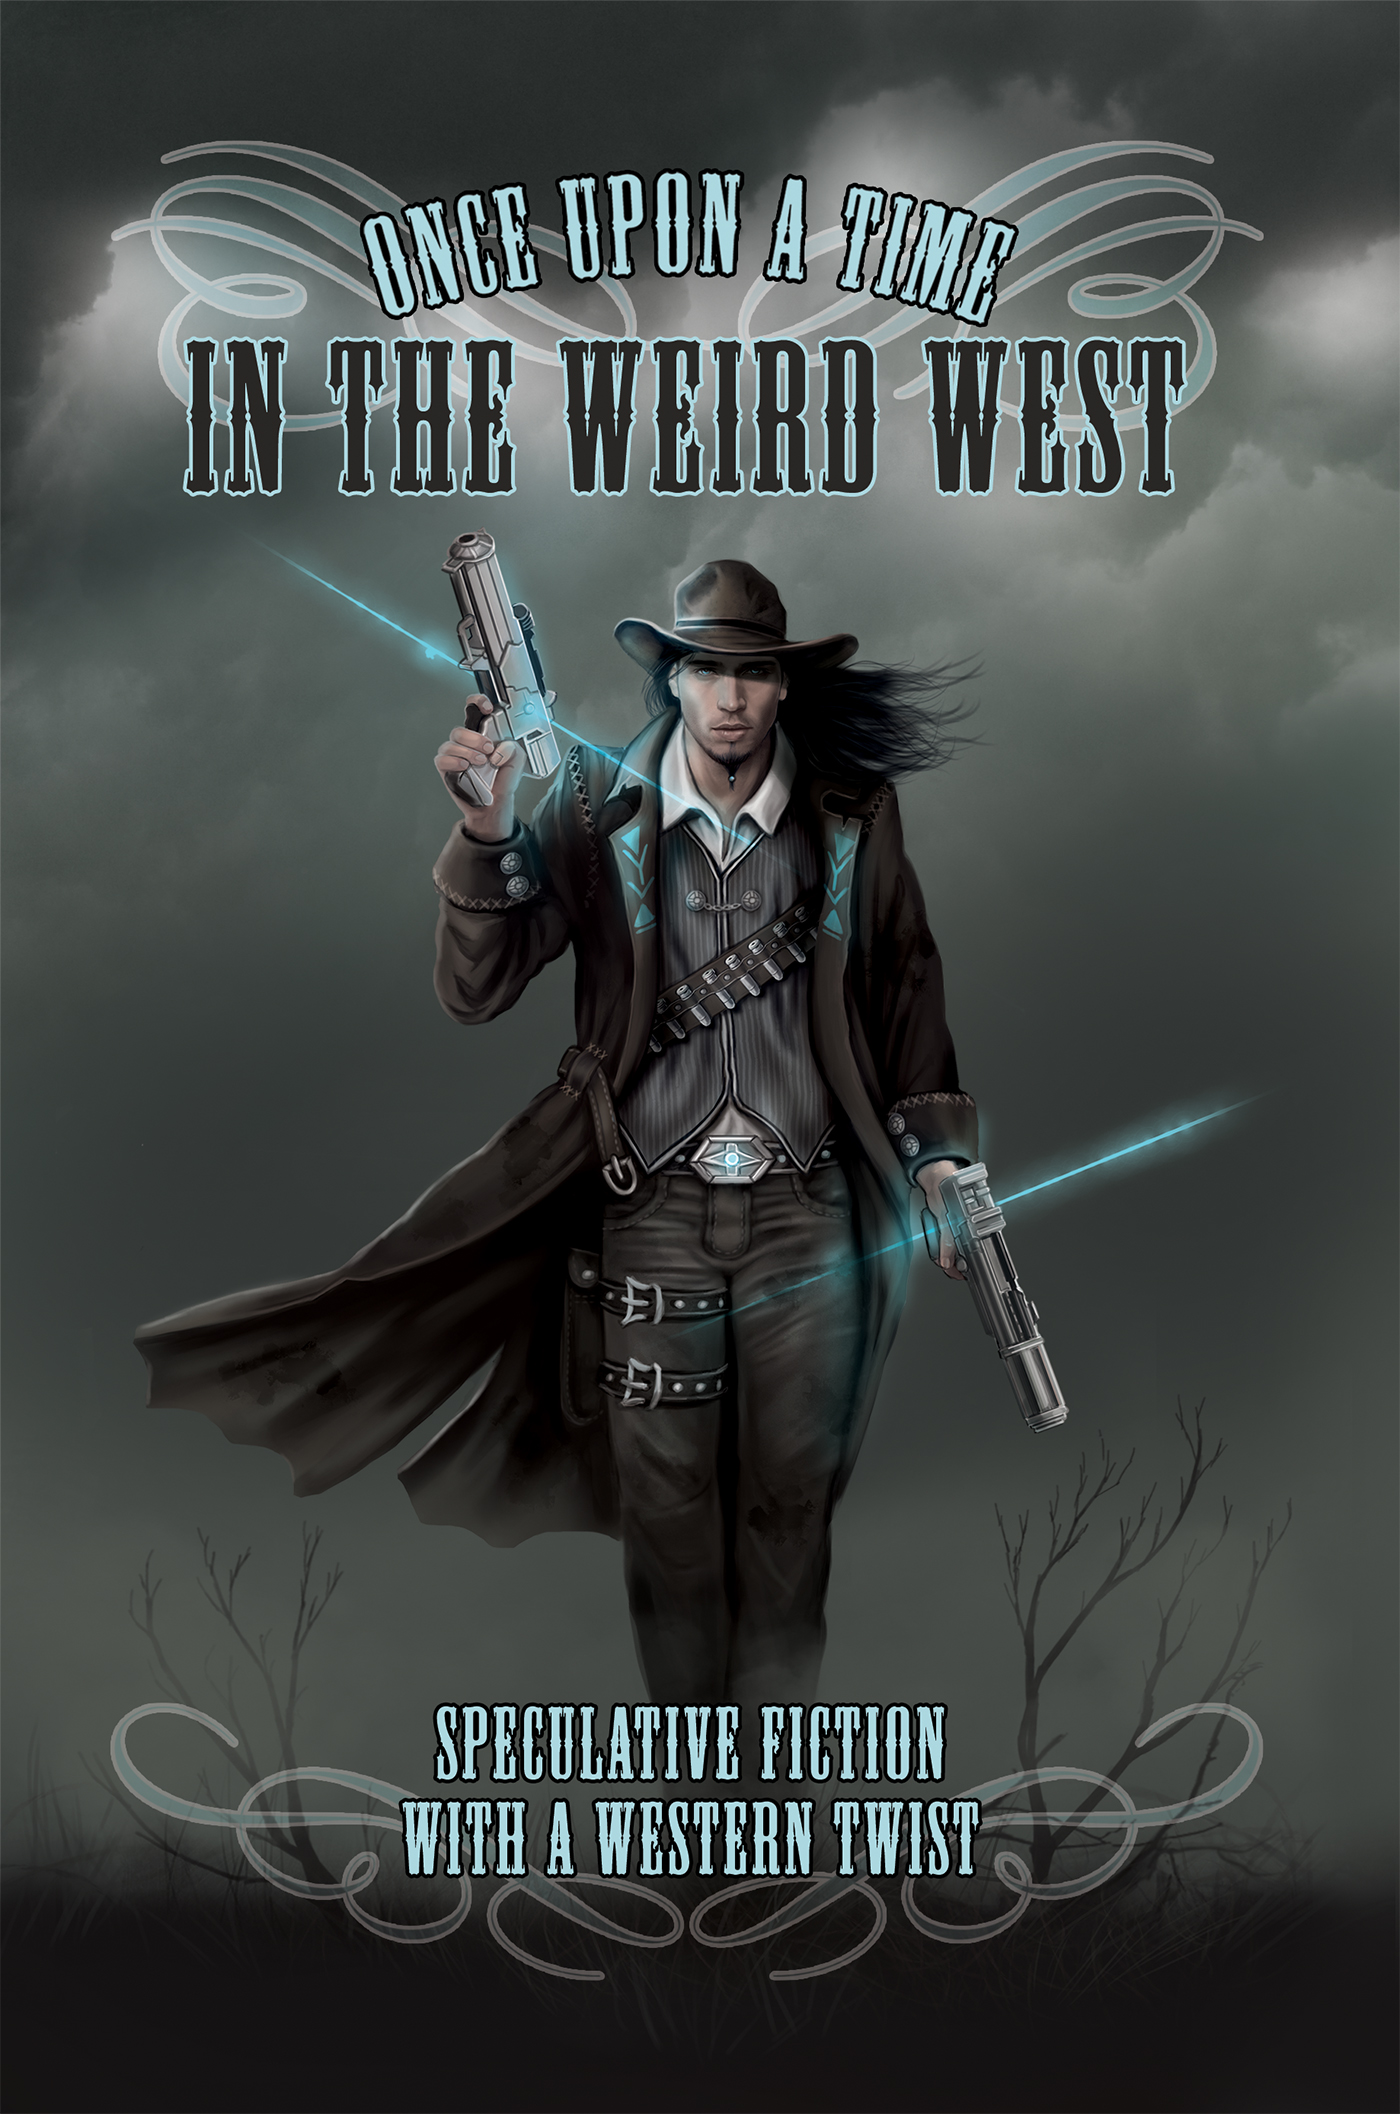 Weird West for ios instal free